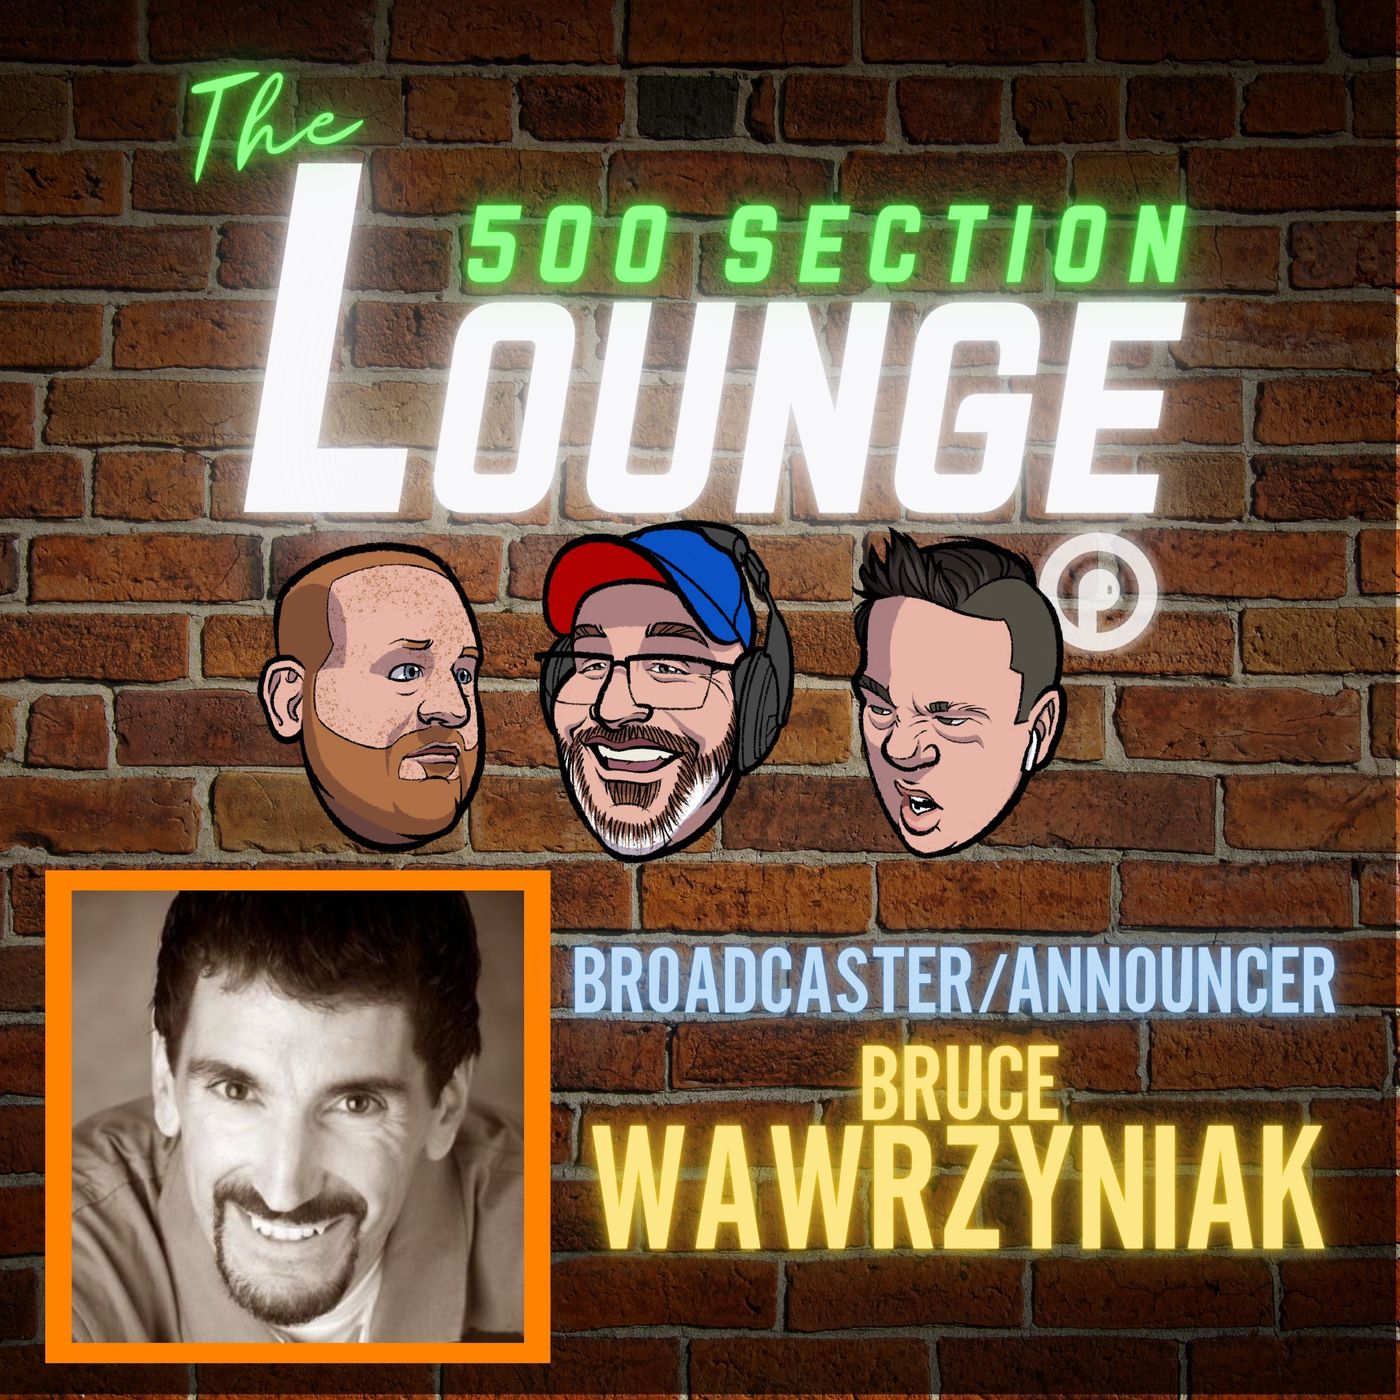 E136: Bruce Wawrzyniak Broadcasts His Story In the Lounge!